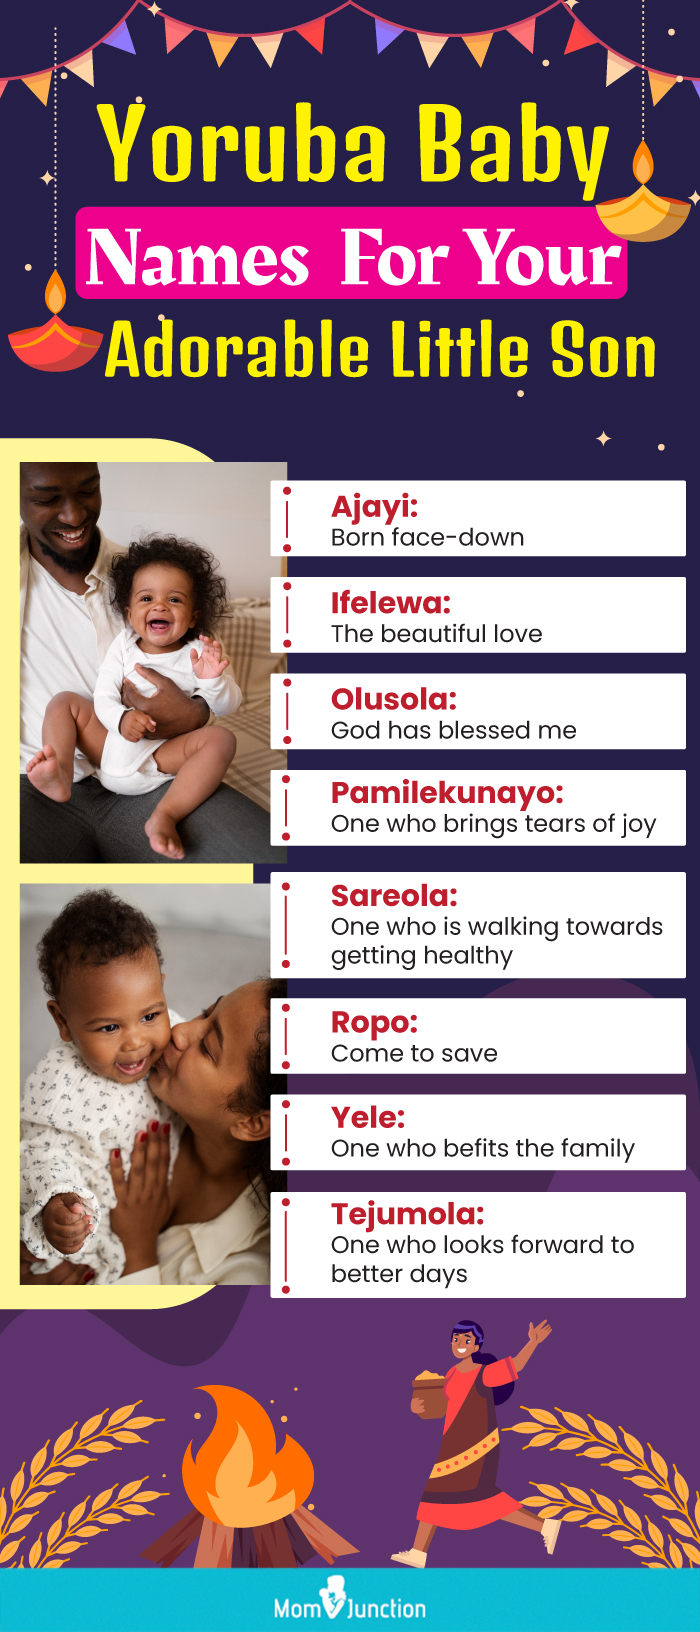 yoruba baby names for your adorable little son (infographic)